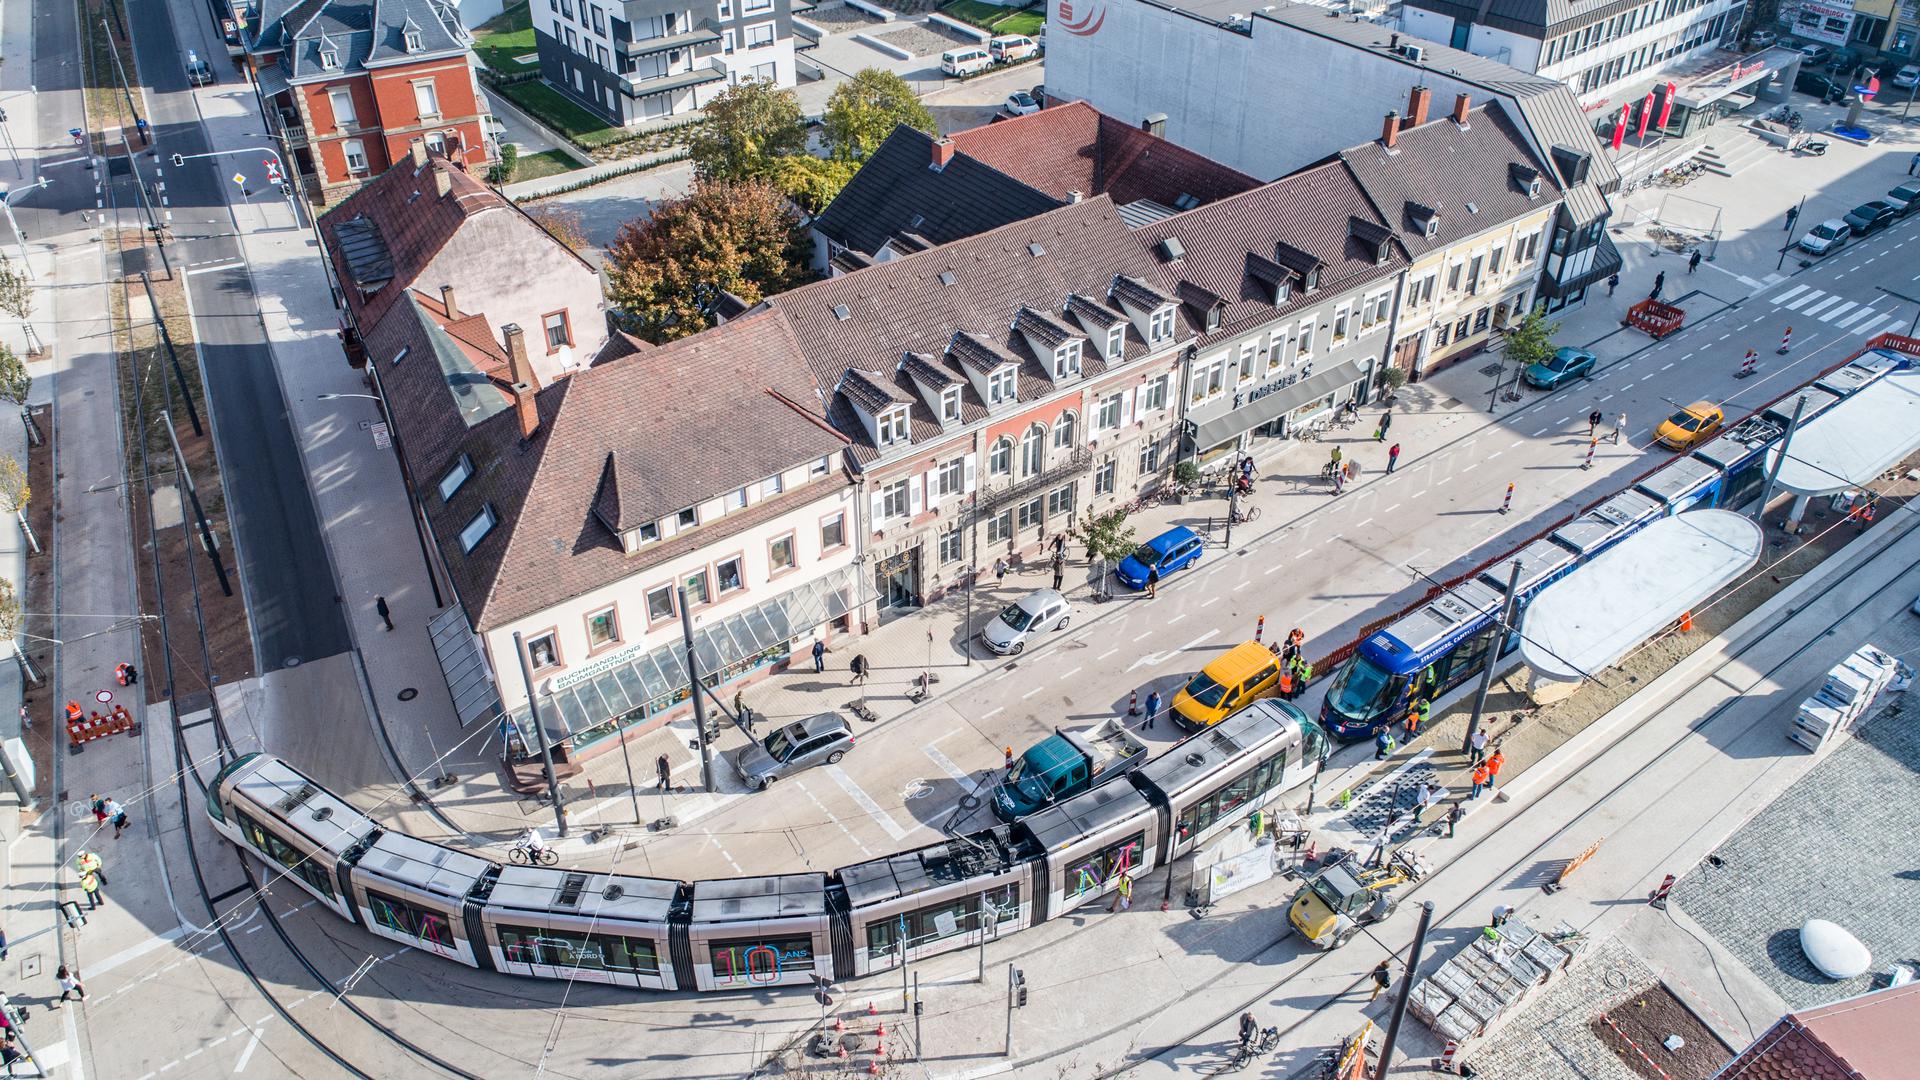 Tram
Kehl
Bügelfahrt
Testfahrt
Rathausplatz